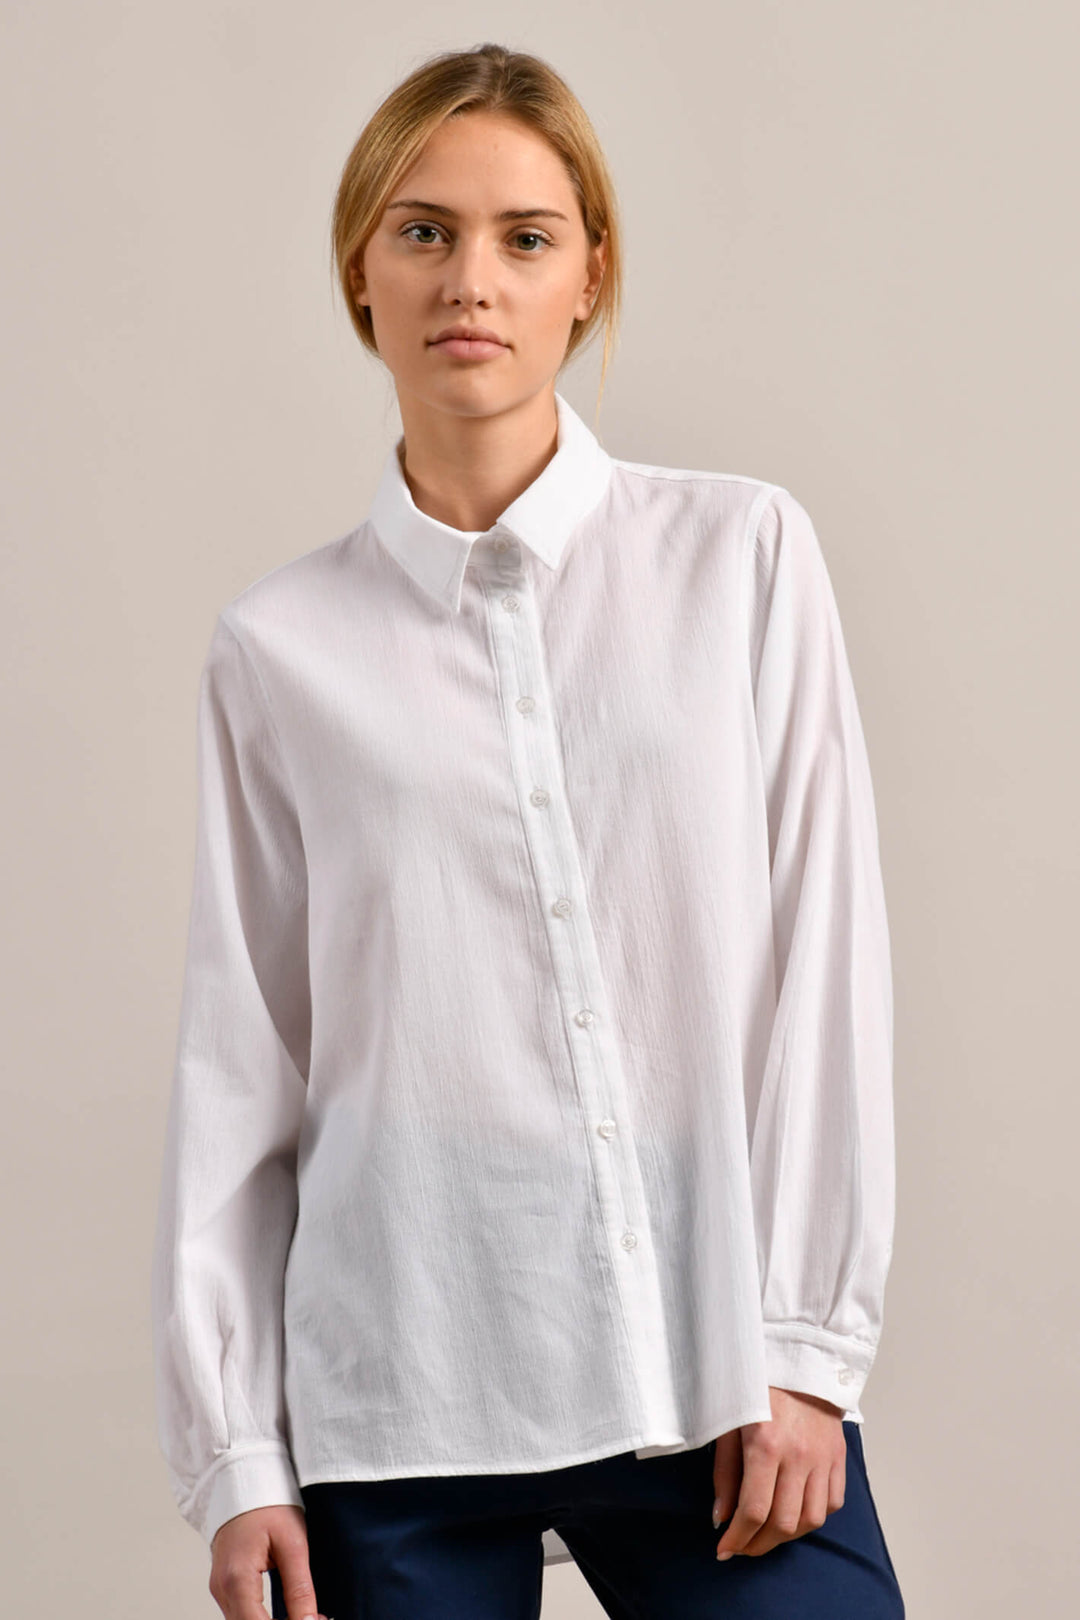 Mat De Misaine Croisiere-32559 U1 White Shirt - Shirley Allum Boutique